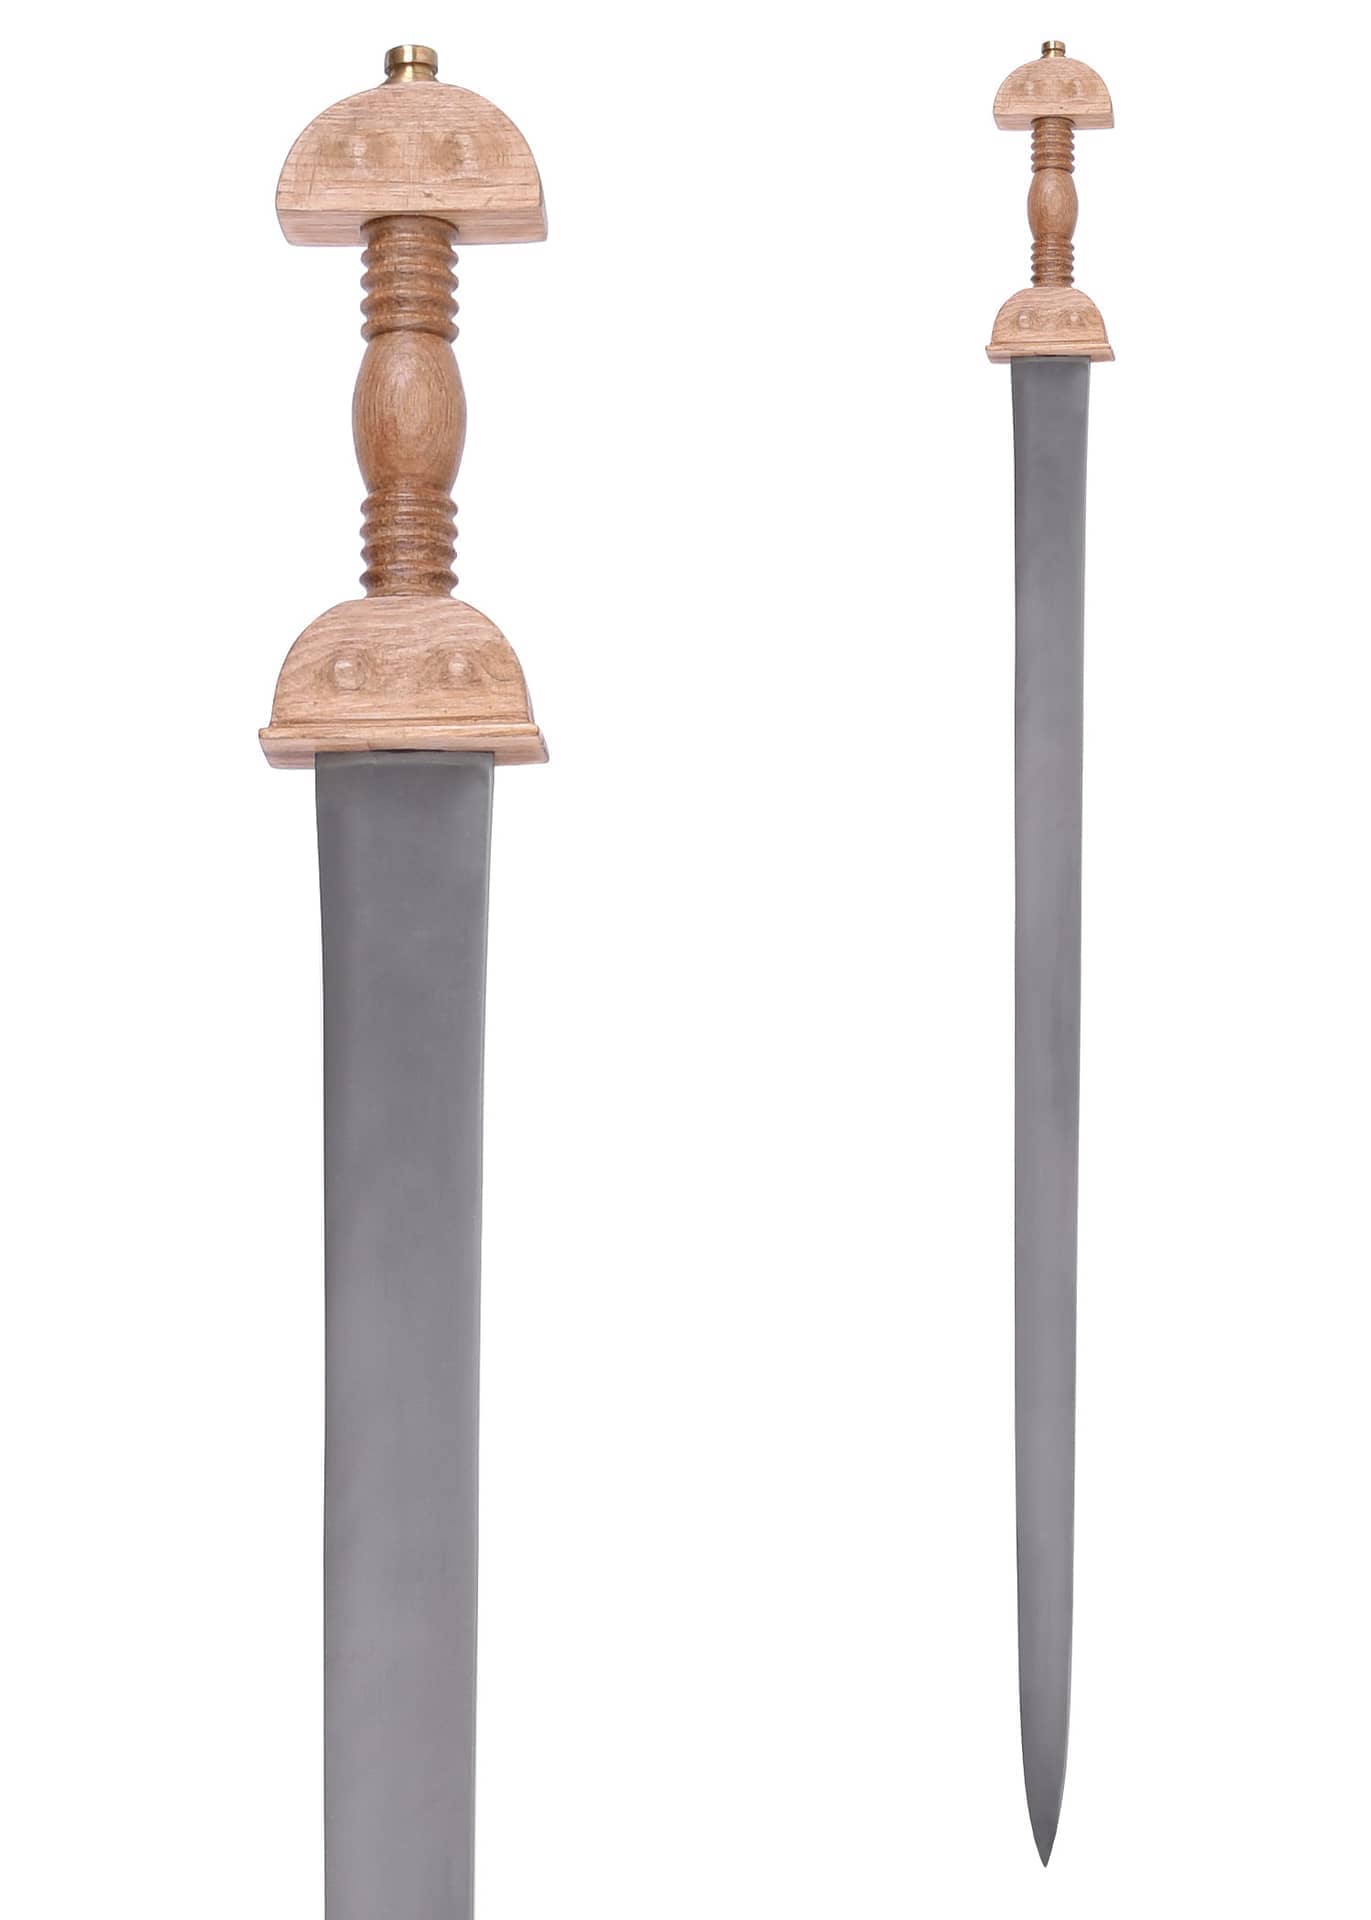 Espada romana, espada larga con vaina, siglo II 0180001600 - Espadas y Más